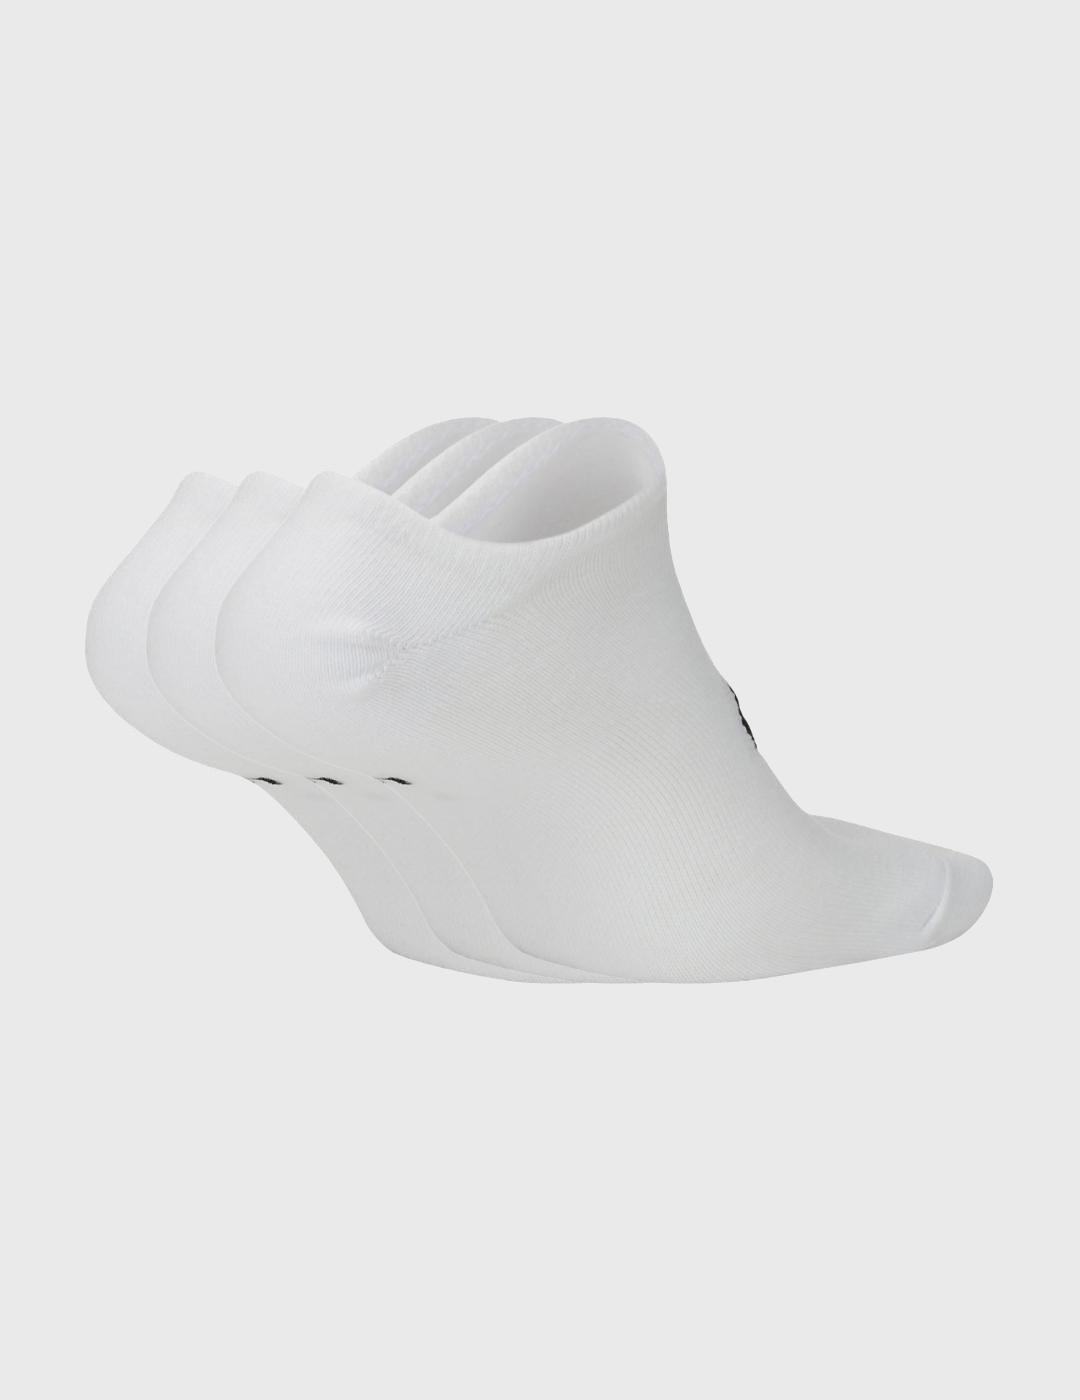  Calcetines Nike Sportswear cortos blancos Unisex